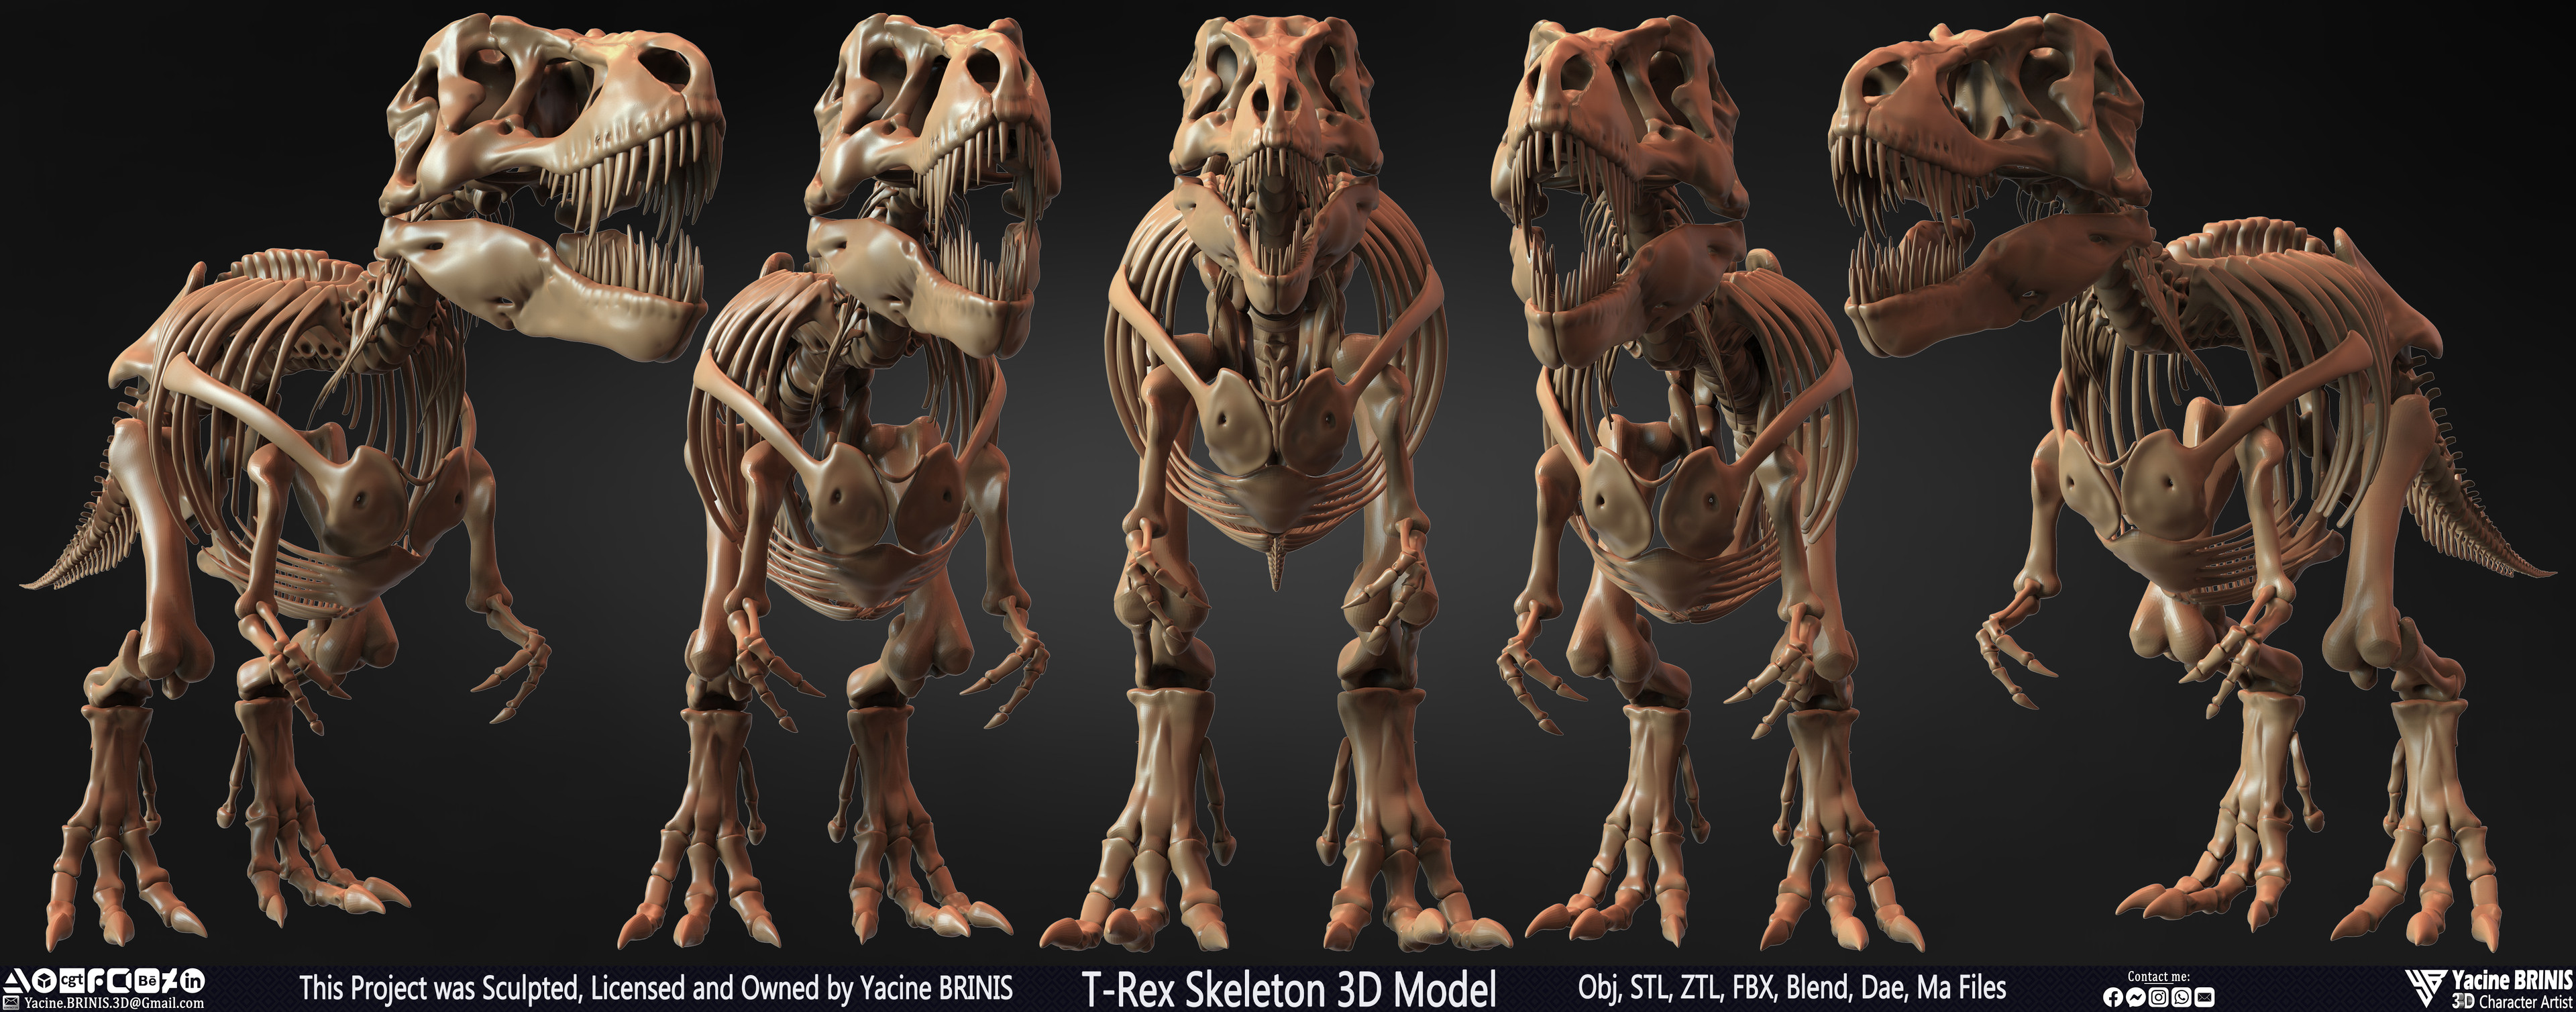 T-Rex Skeleton 3D Model (Tyrannosaurus Rex) Sculpted By Yacine BRINIS Set 002